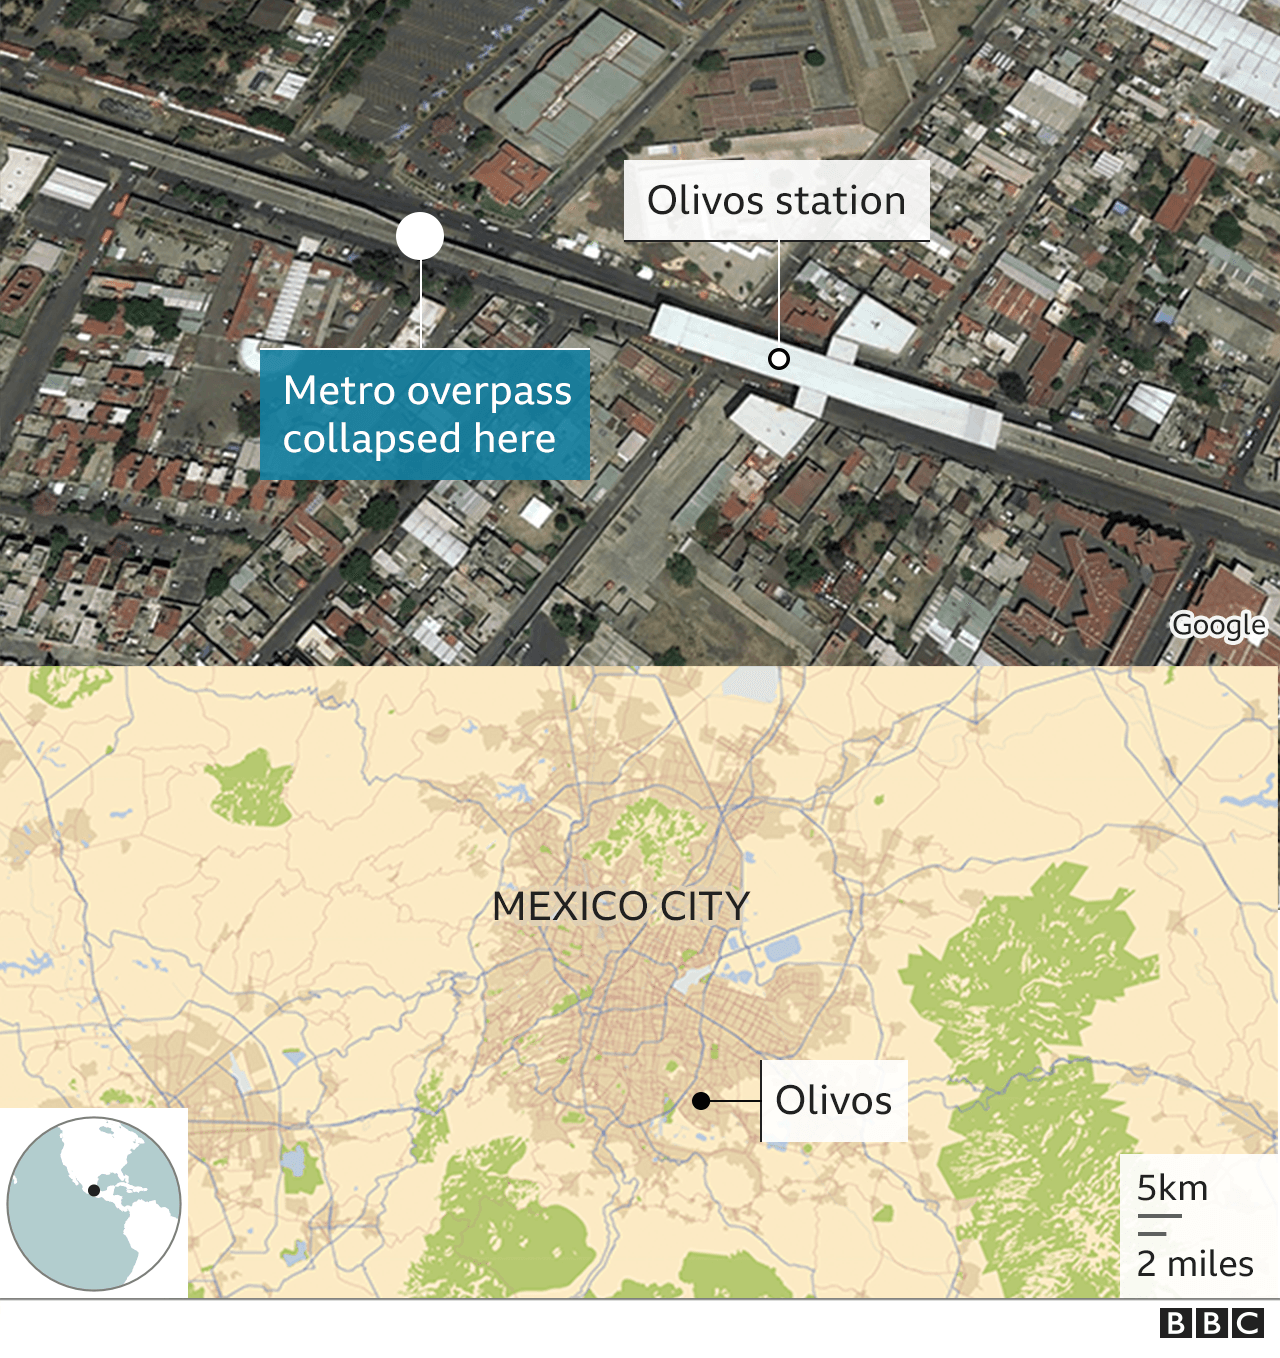 Mexico City metro overpass collapse kills 23 - BBC News